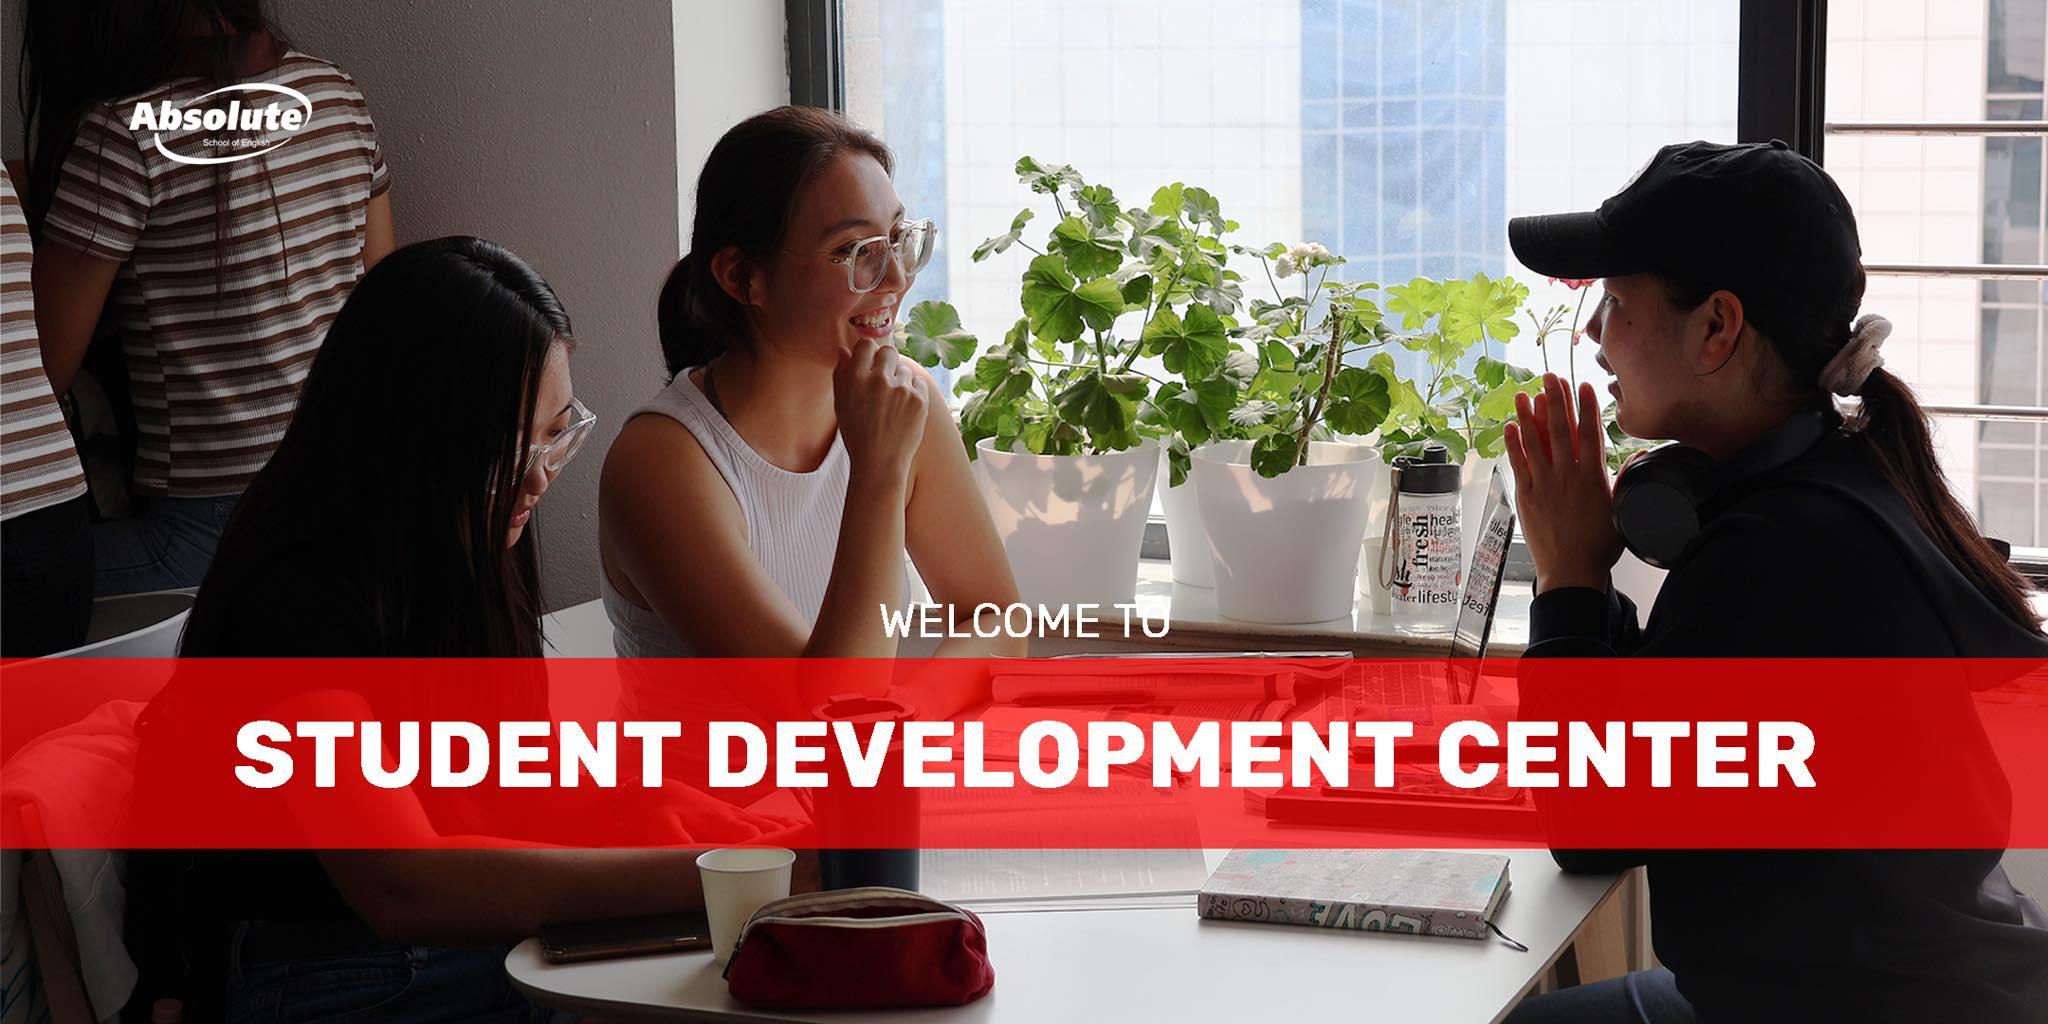 Student Development Center (SDC) opened